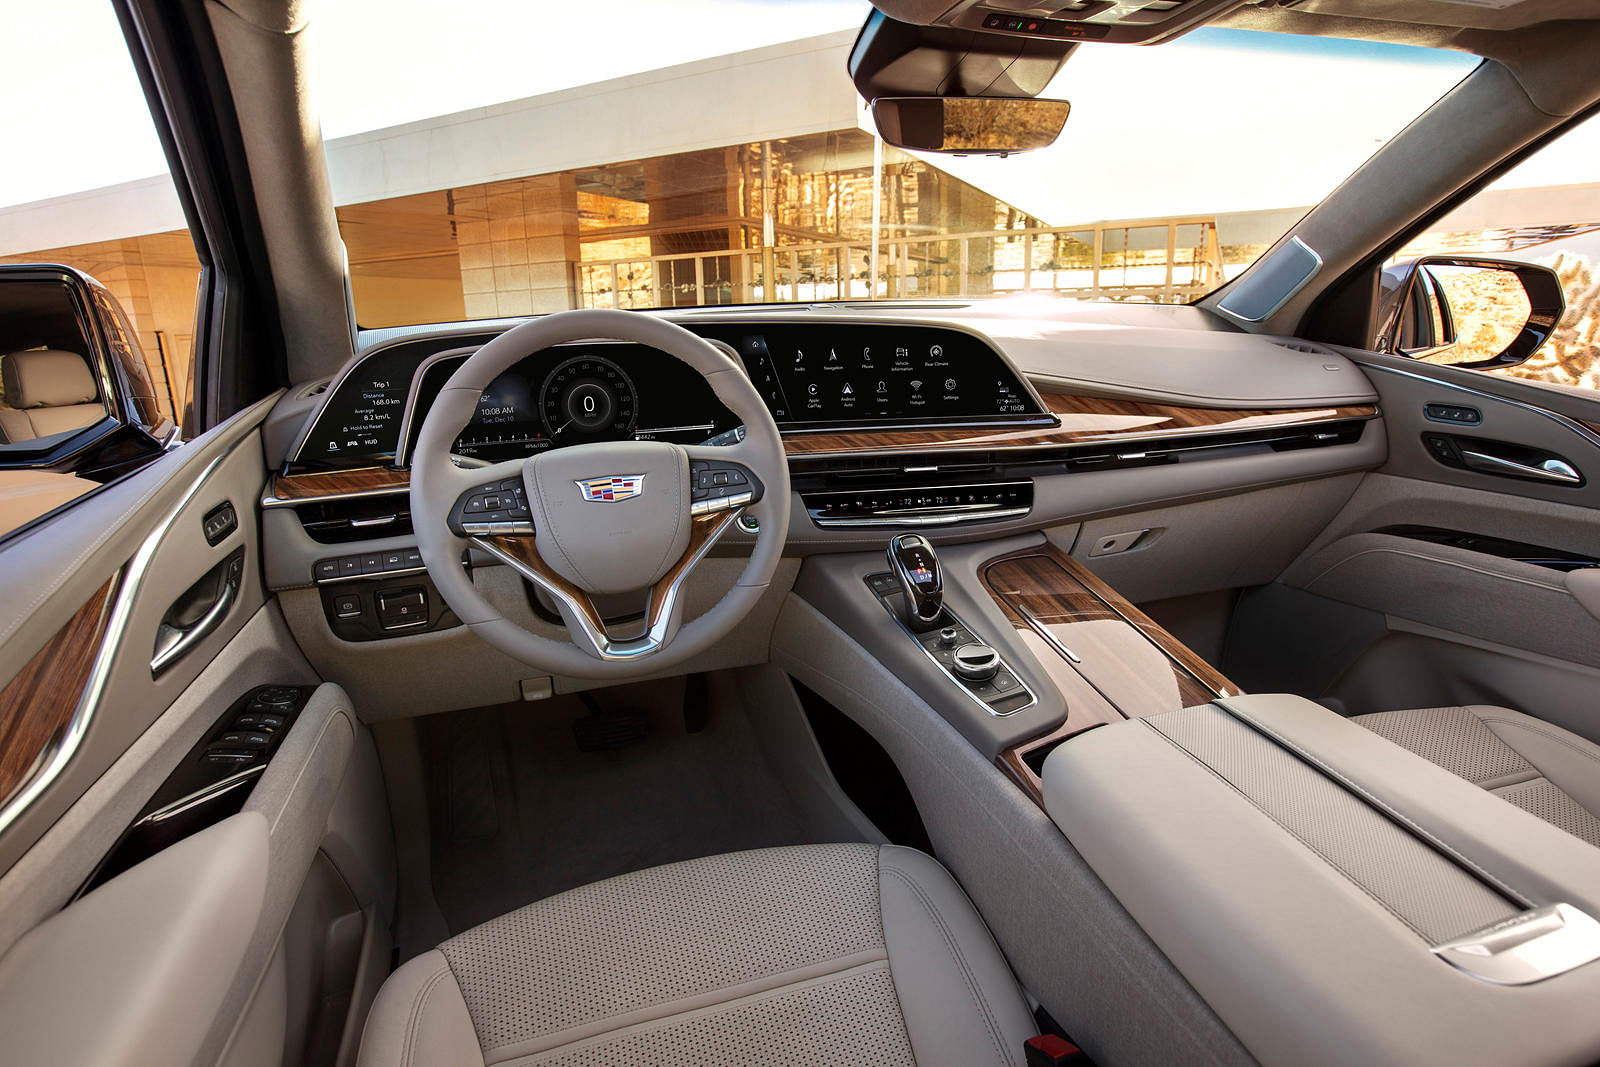 2022 Cadillac Escalade Interior Review Seating, Infotainment